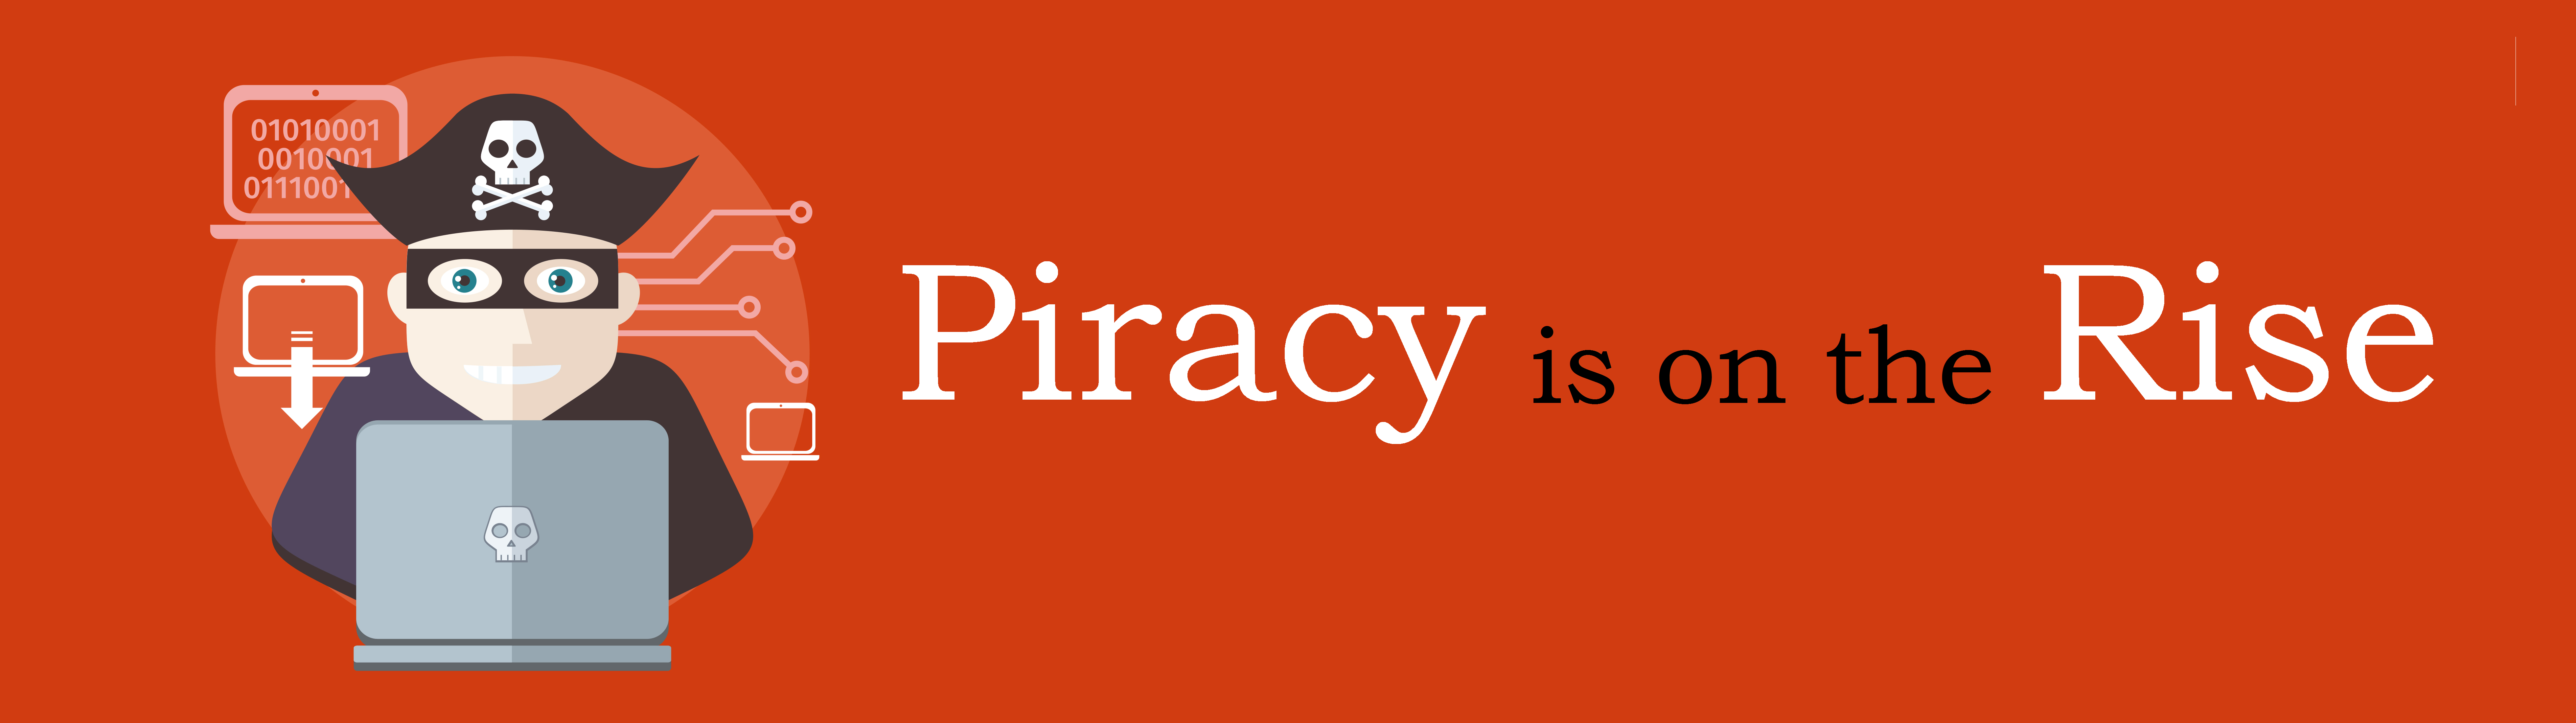 media piracy